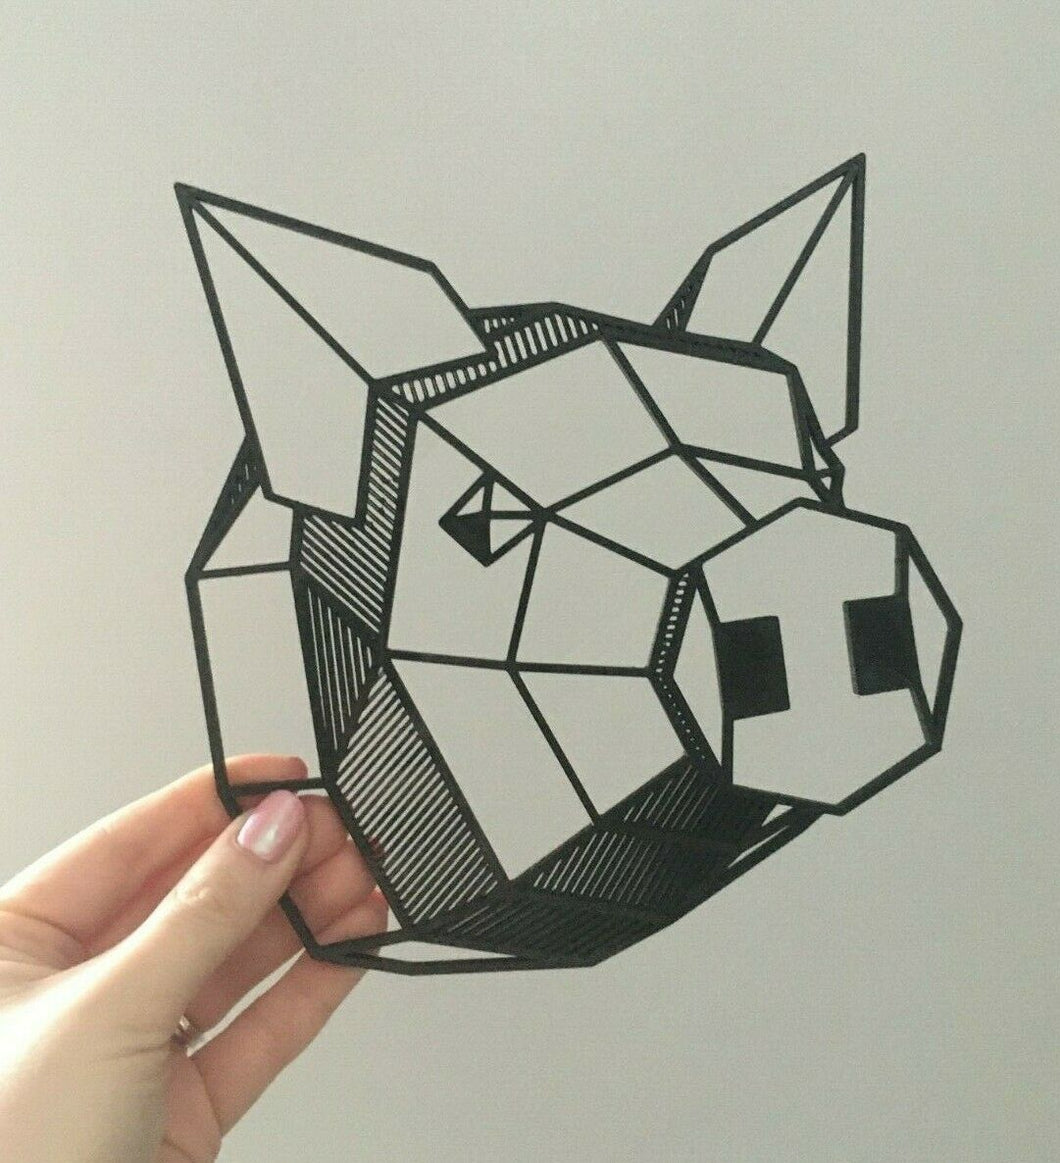 Geometric Pig Head Wall Art Decor Hanging Decoration Origami Style